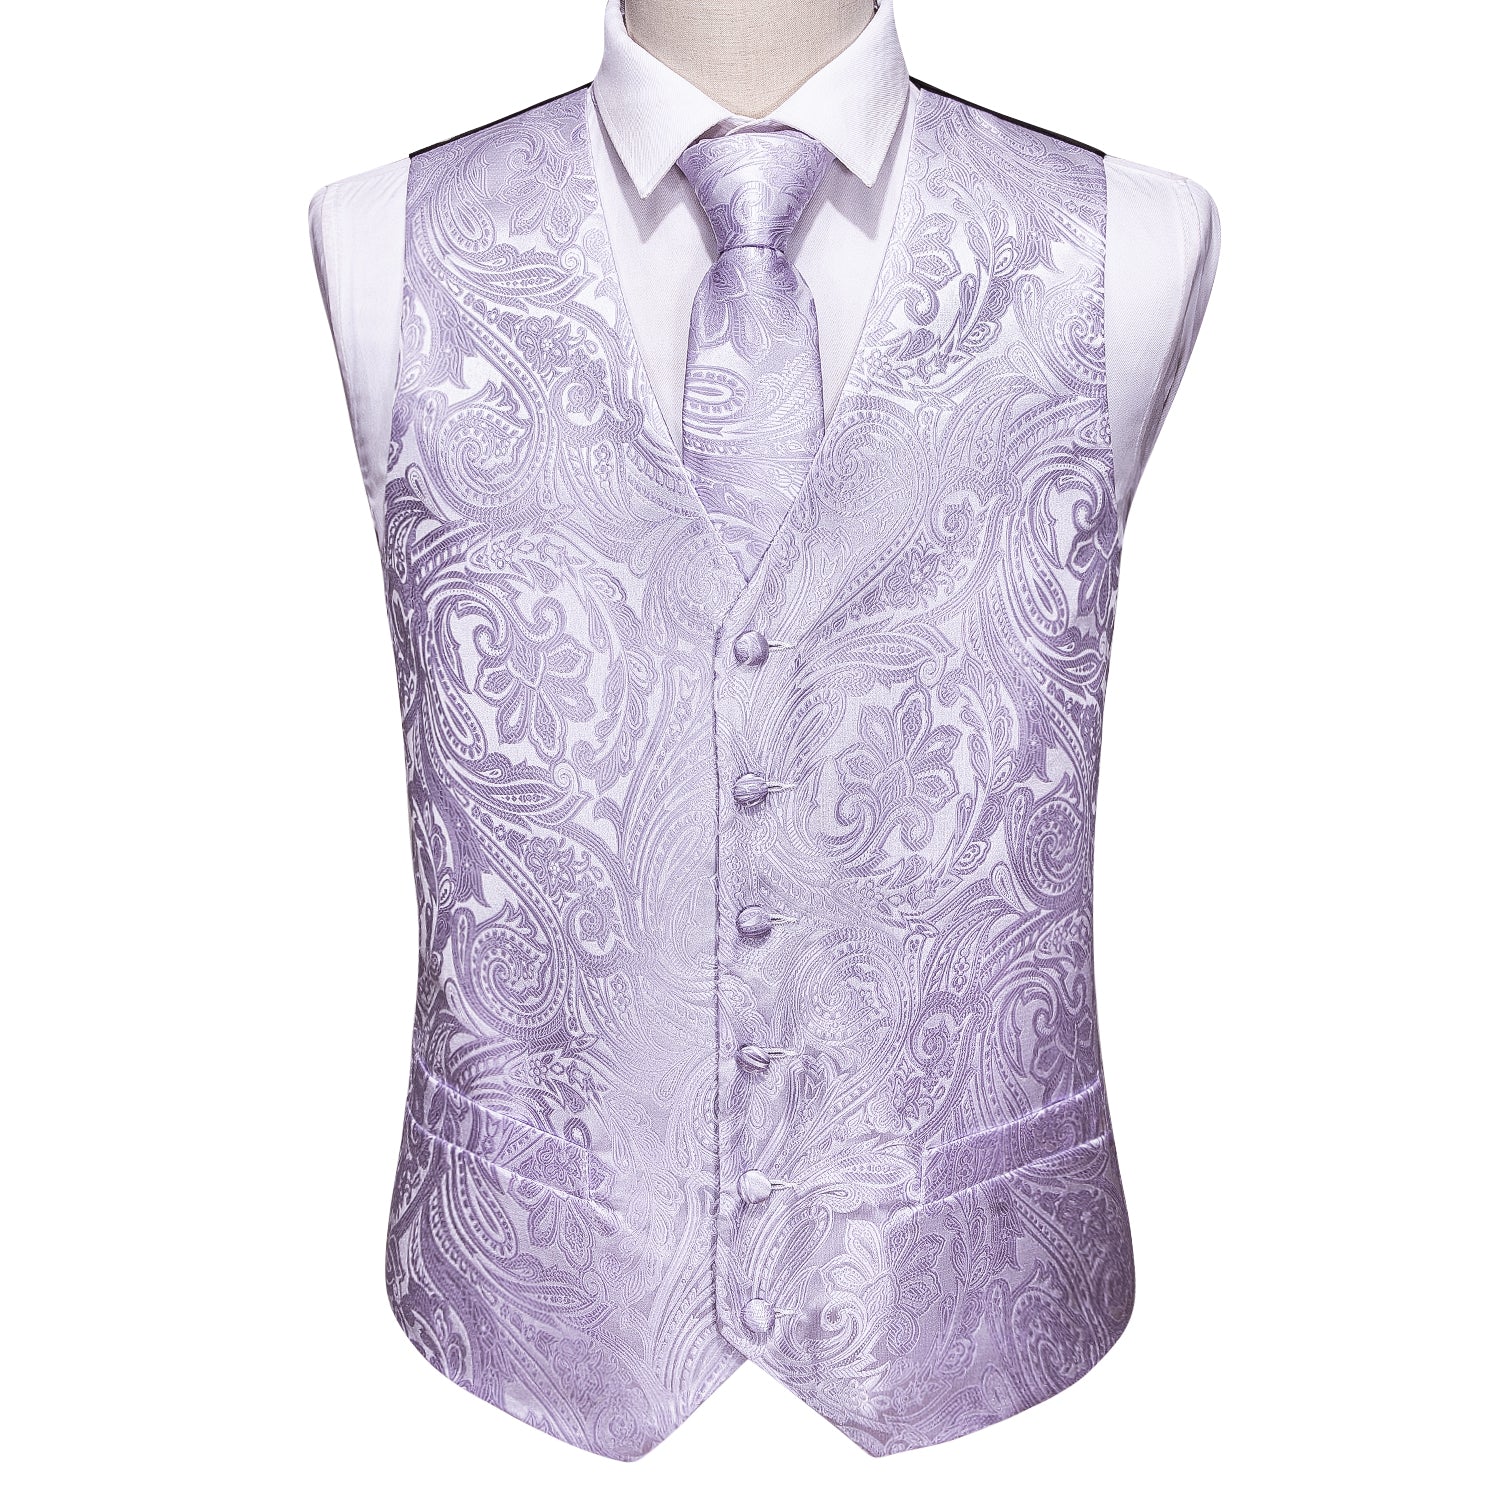 purple vest and tie set